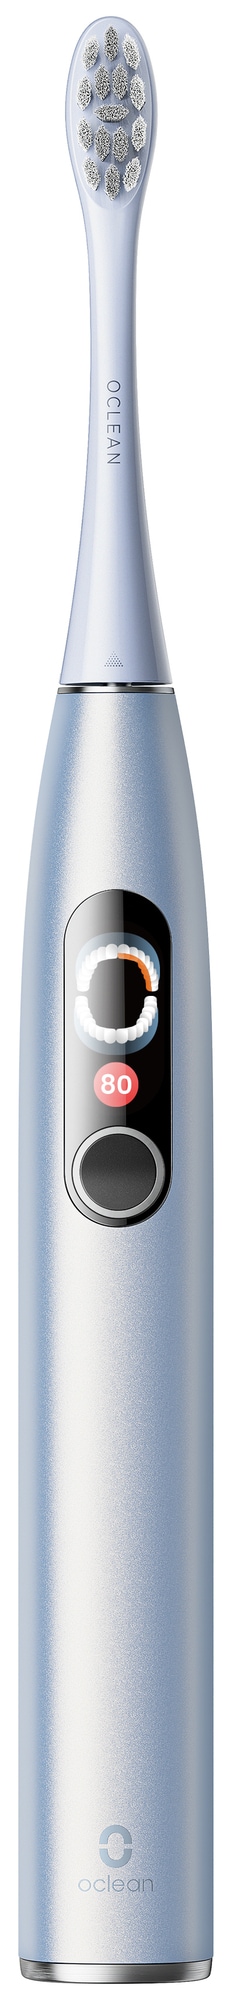 Oclean X Pro Clean Digital S elektrisk tandbørste 6830185 (sølv)